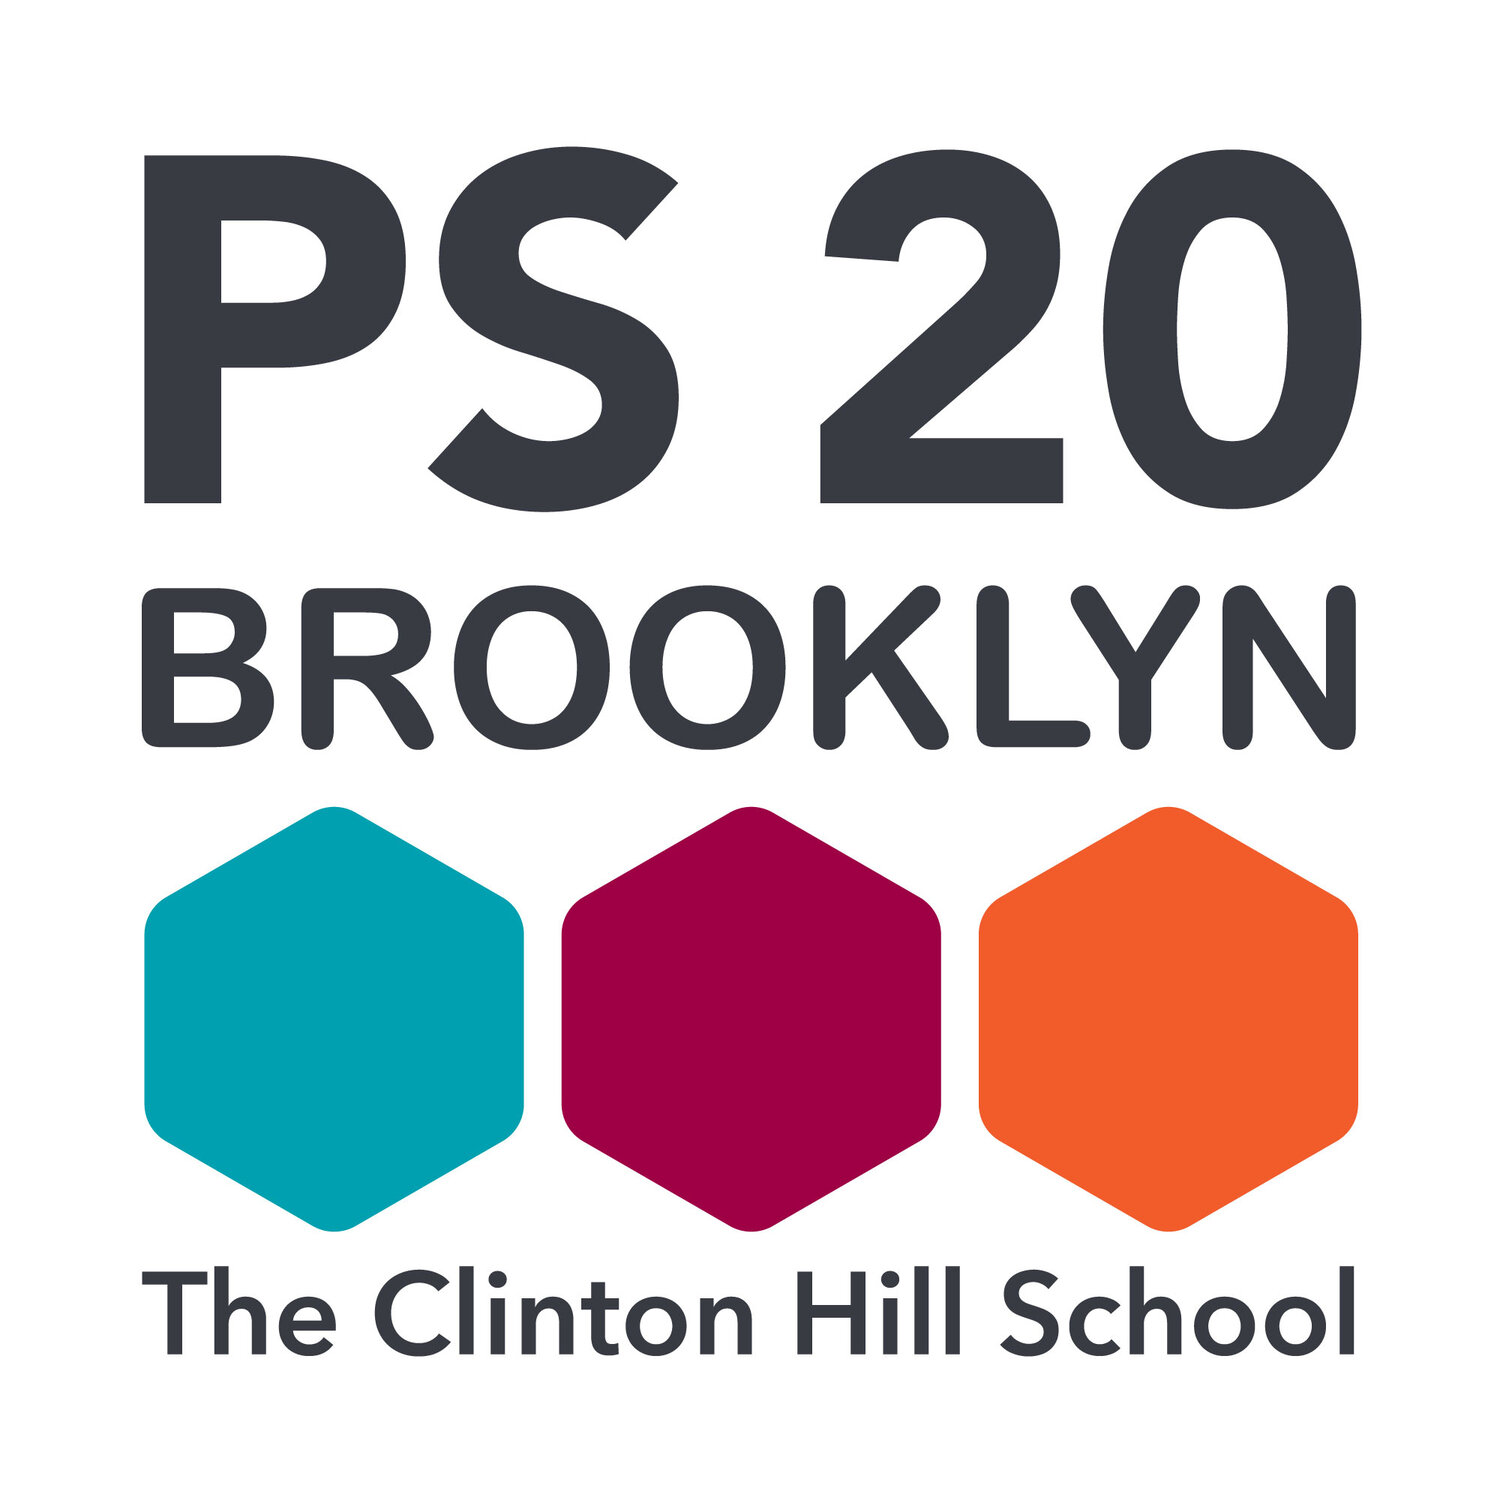 PS 20 The Clinton Hill School